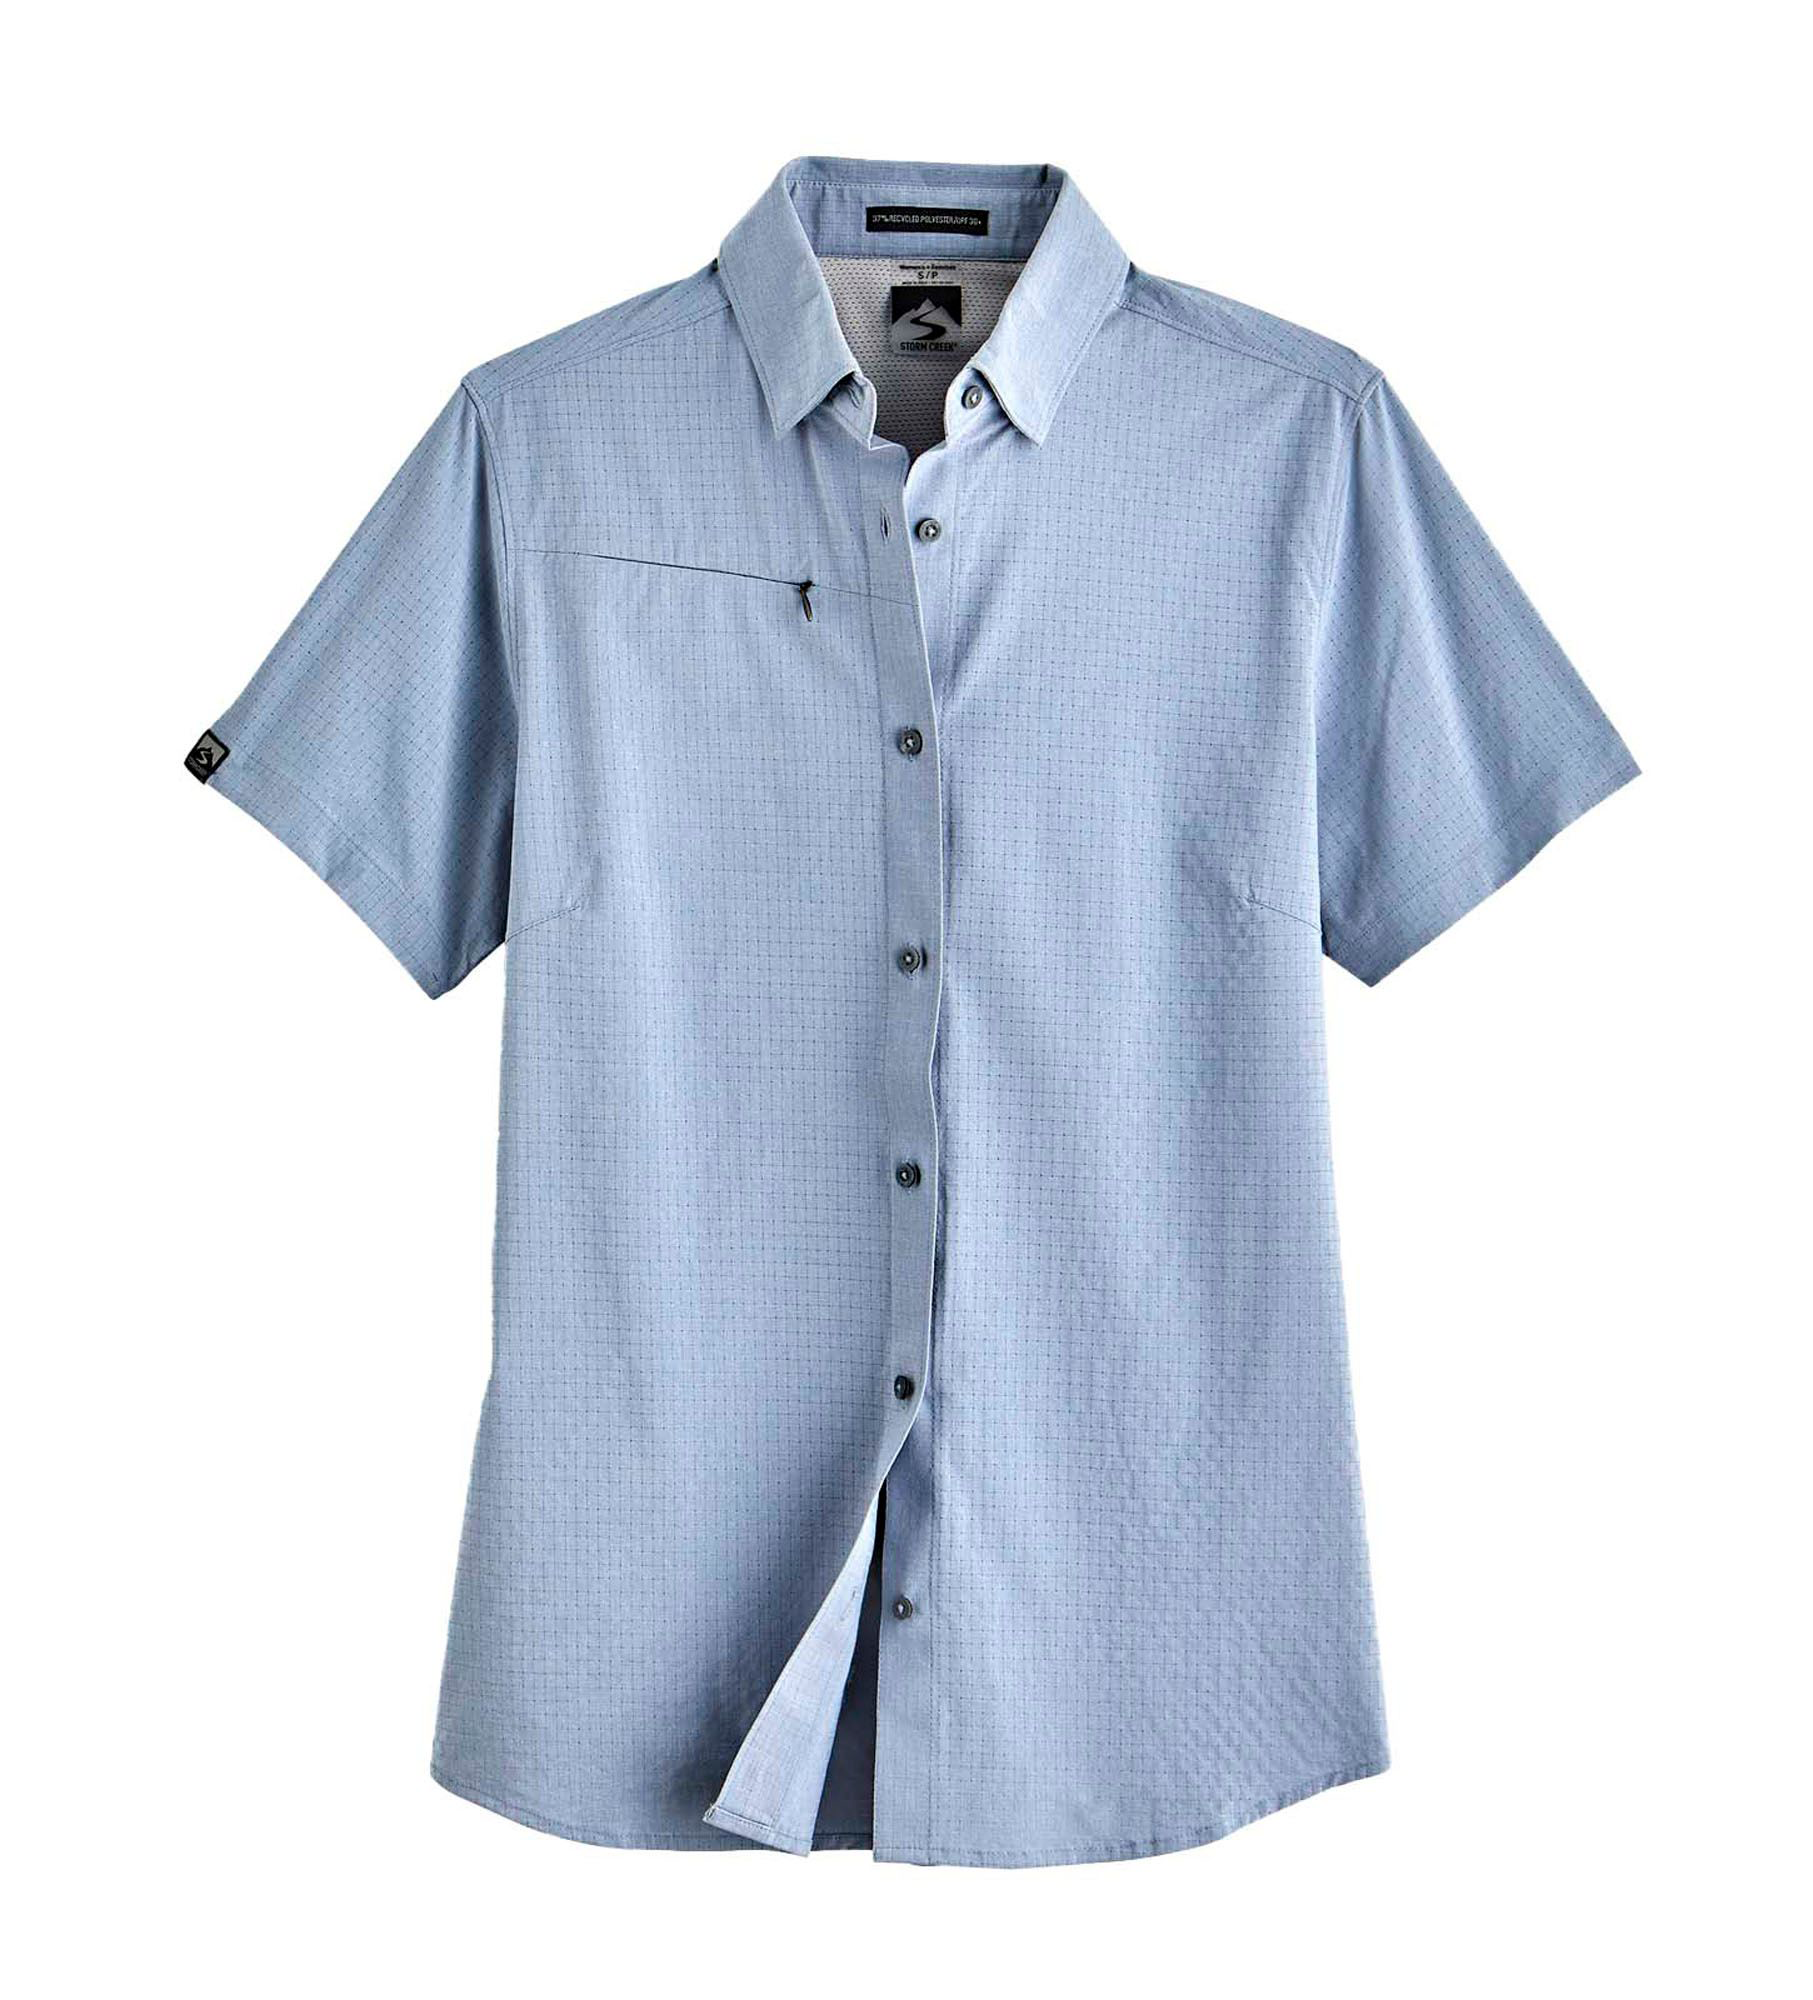 Storm Creek Naturalist Short-Sleeve Shirt for Ladies - Blue Mist - XS